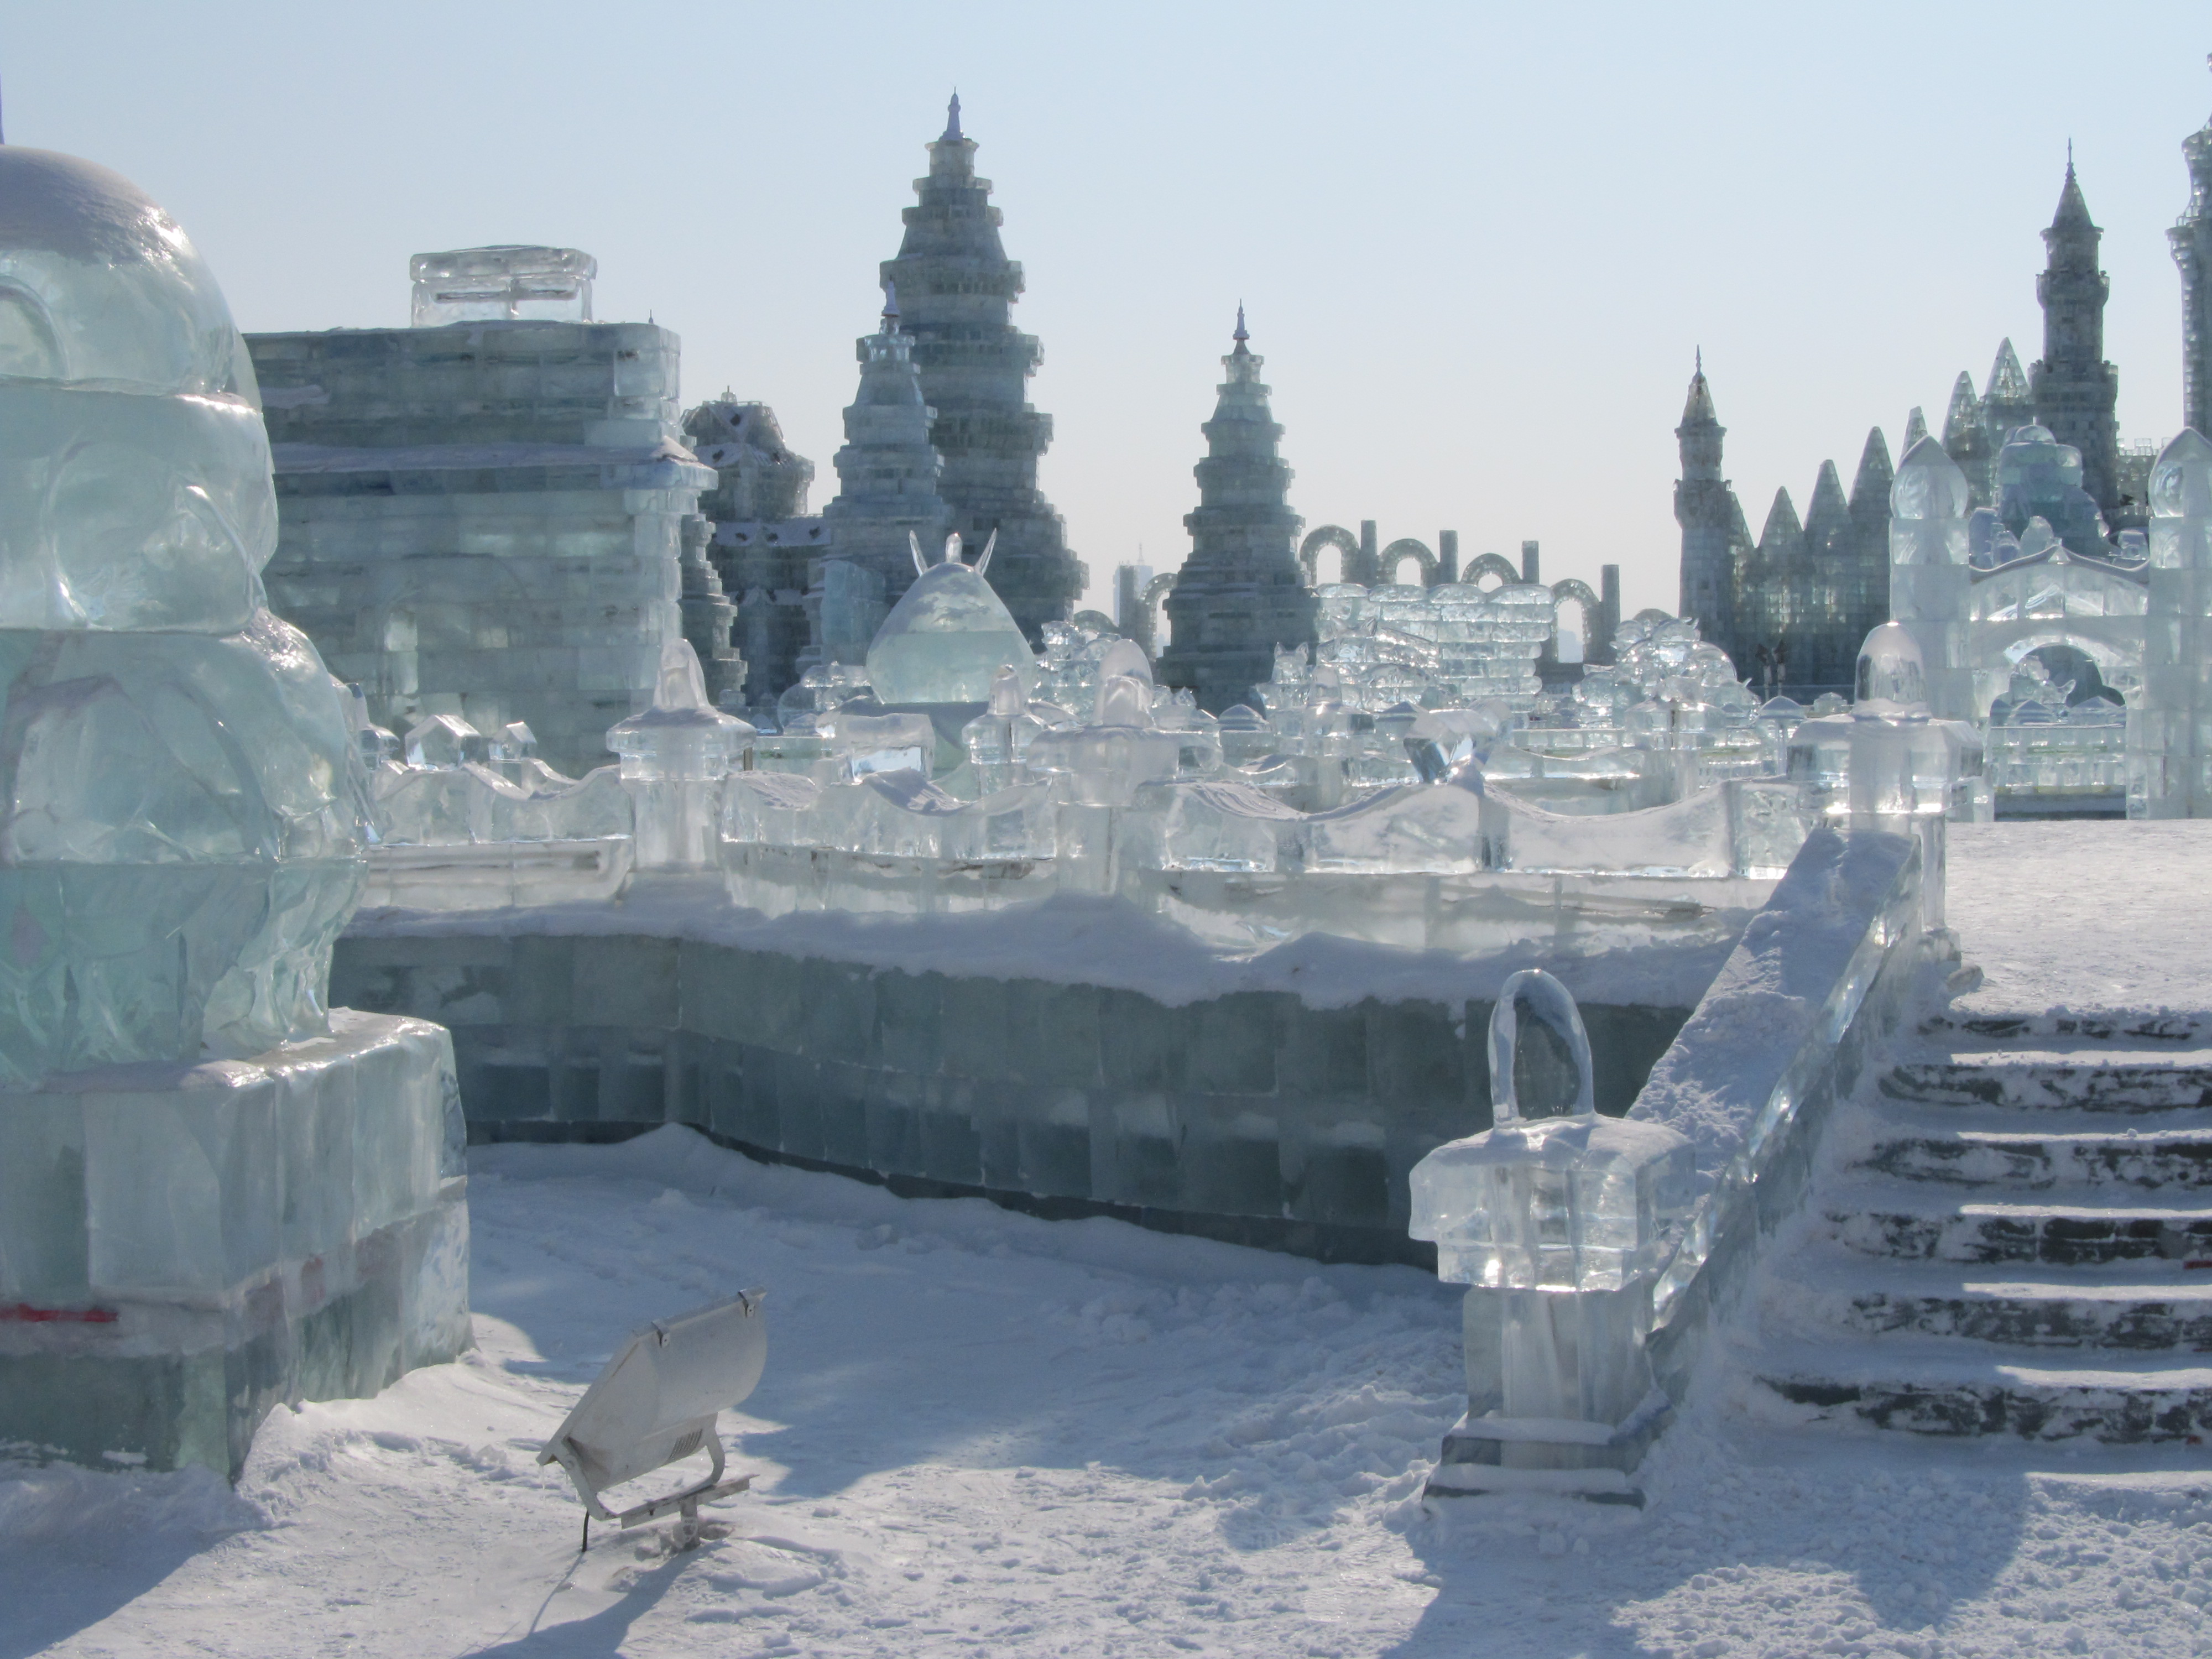 File:Harbin Ice and Snow Festival 2013.jpg - Wikimedia Commons